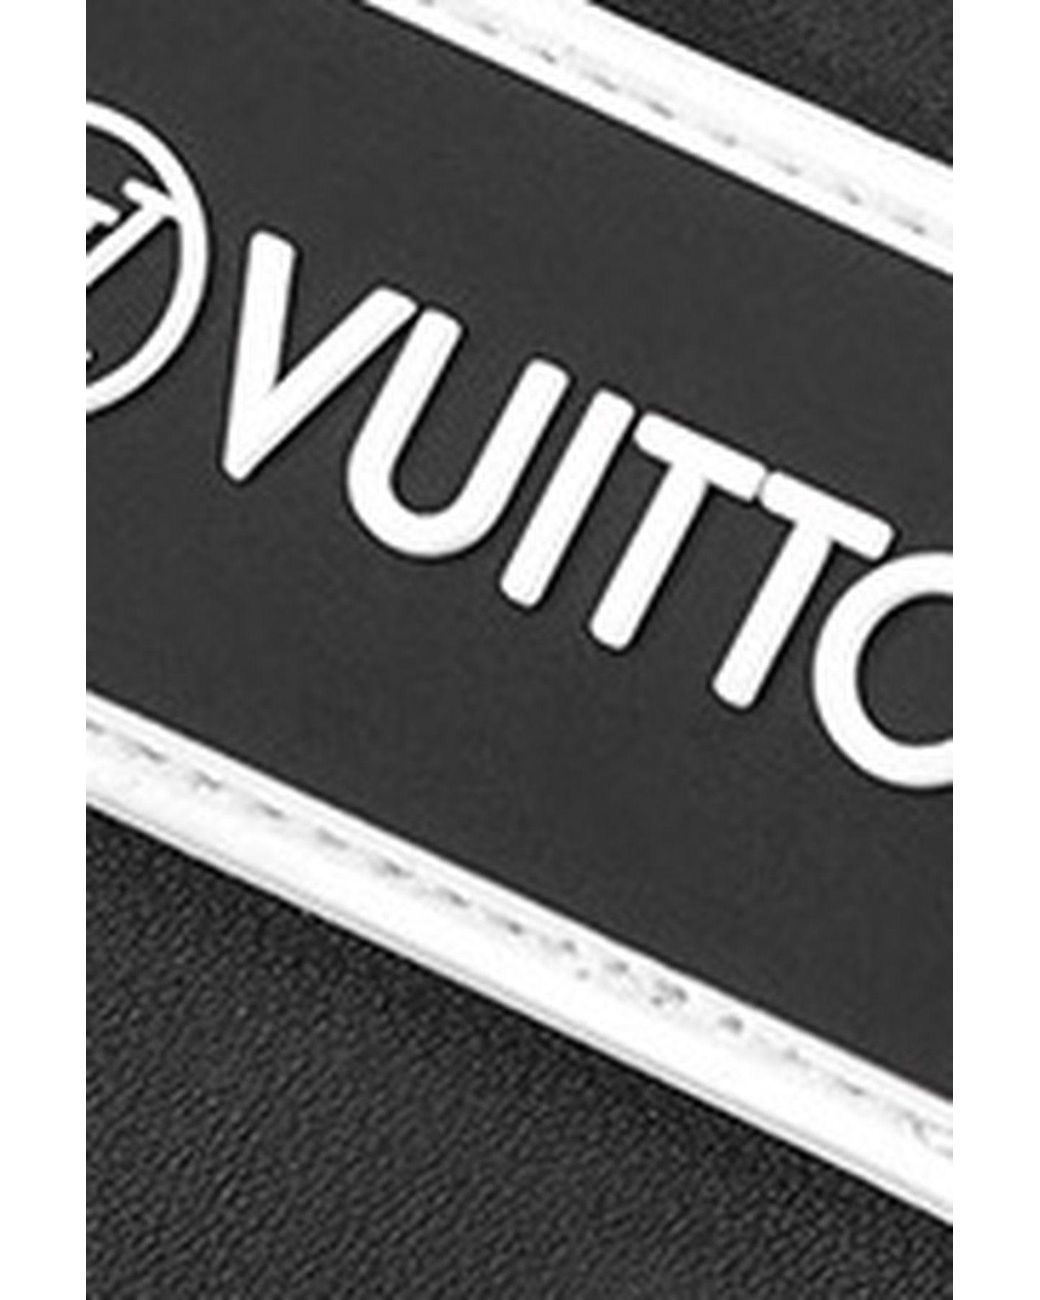 Louis Vuitton Lv Sunset Flat Comfort Mule in Black